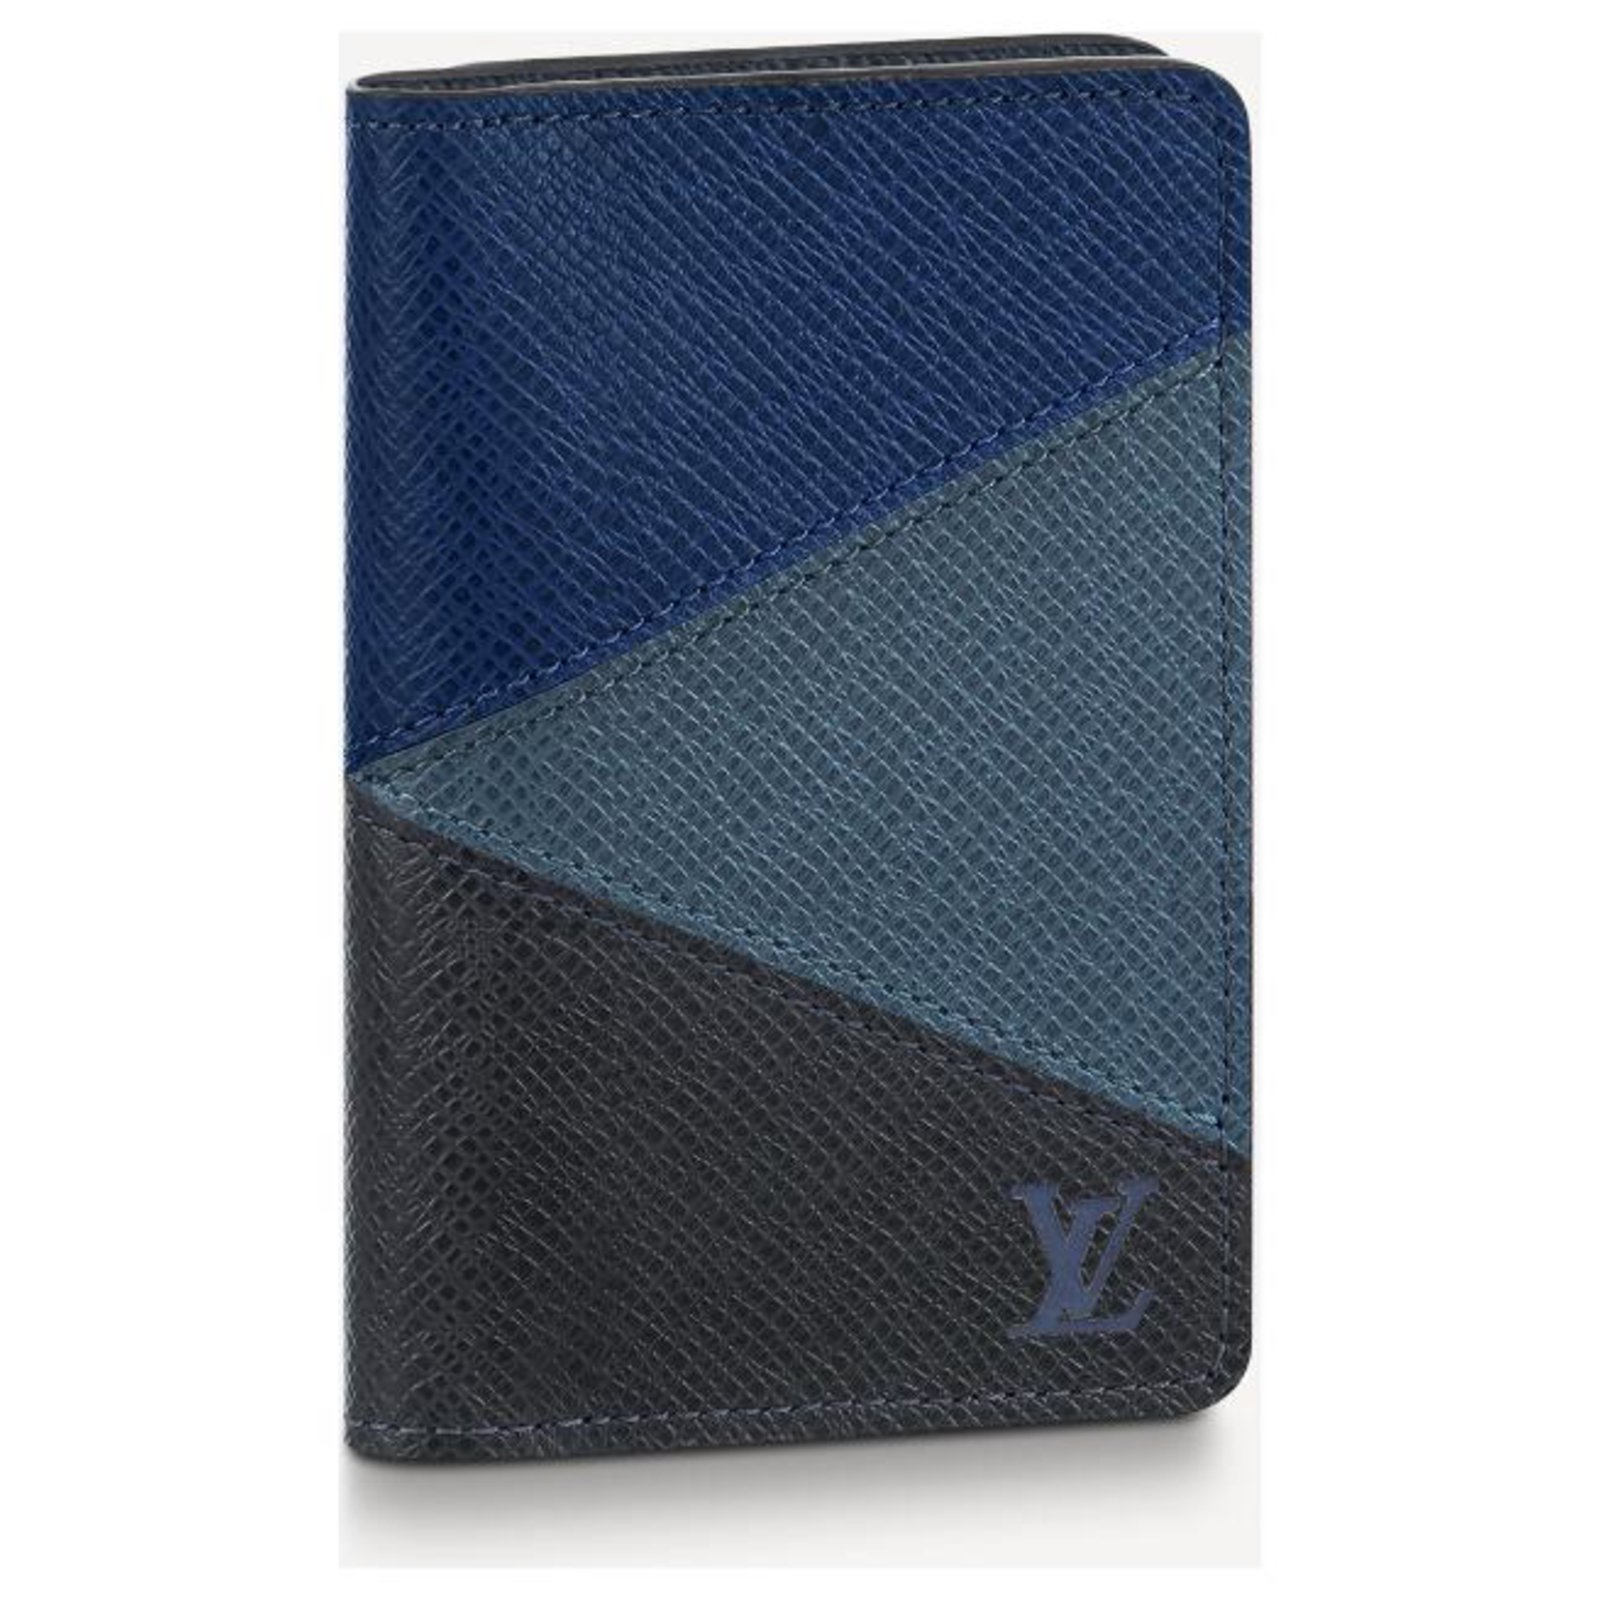 Louis Vuitton Pocket Organiser, Navy, One Size